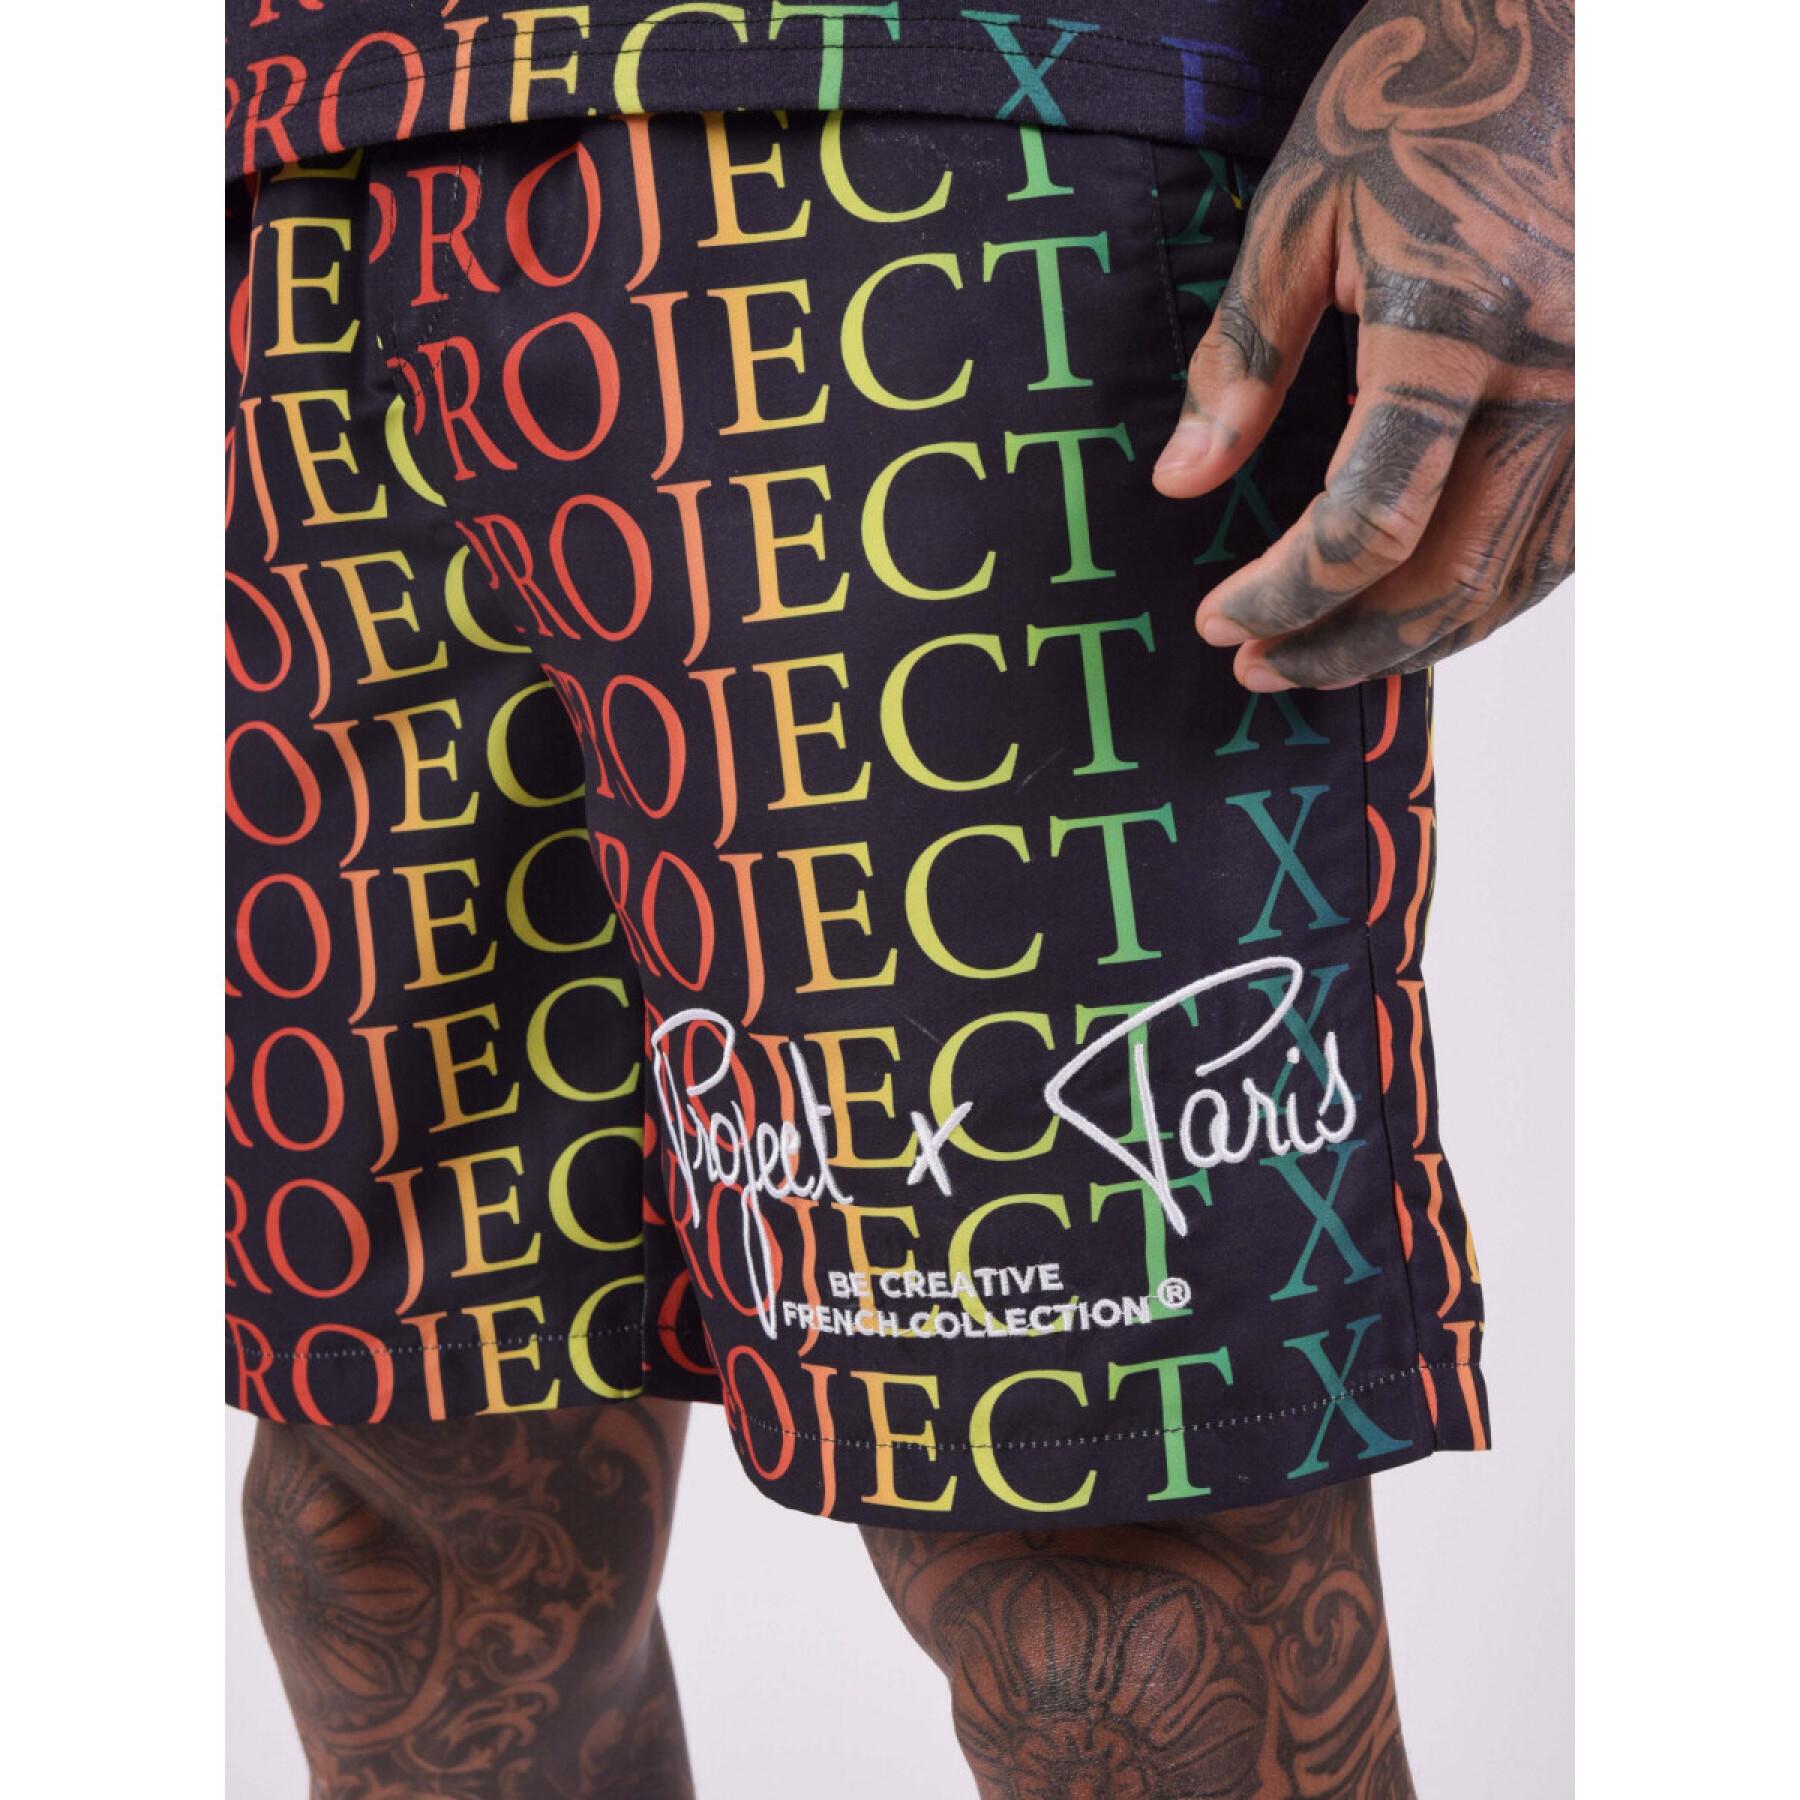 Shorts met regenboog gradiënt logo Project X Paris